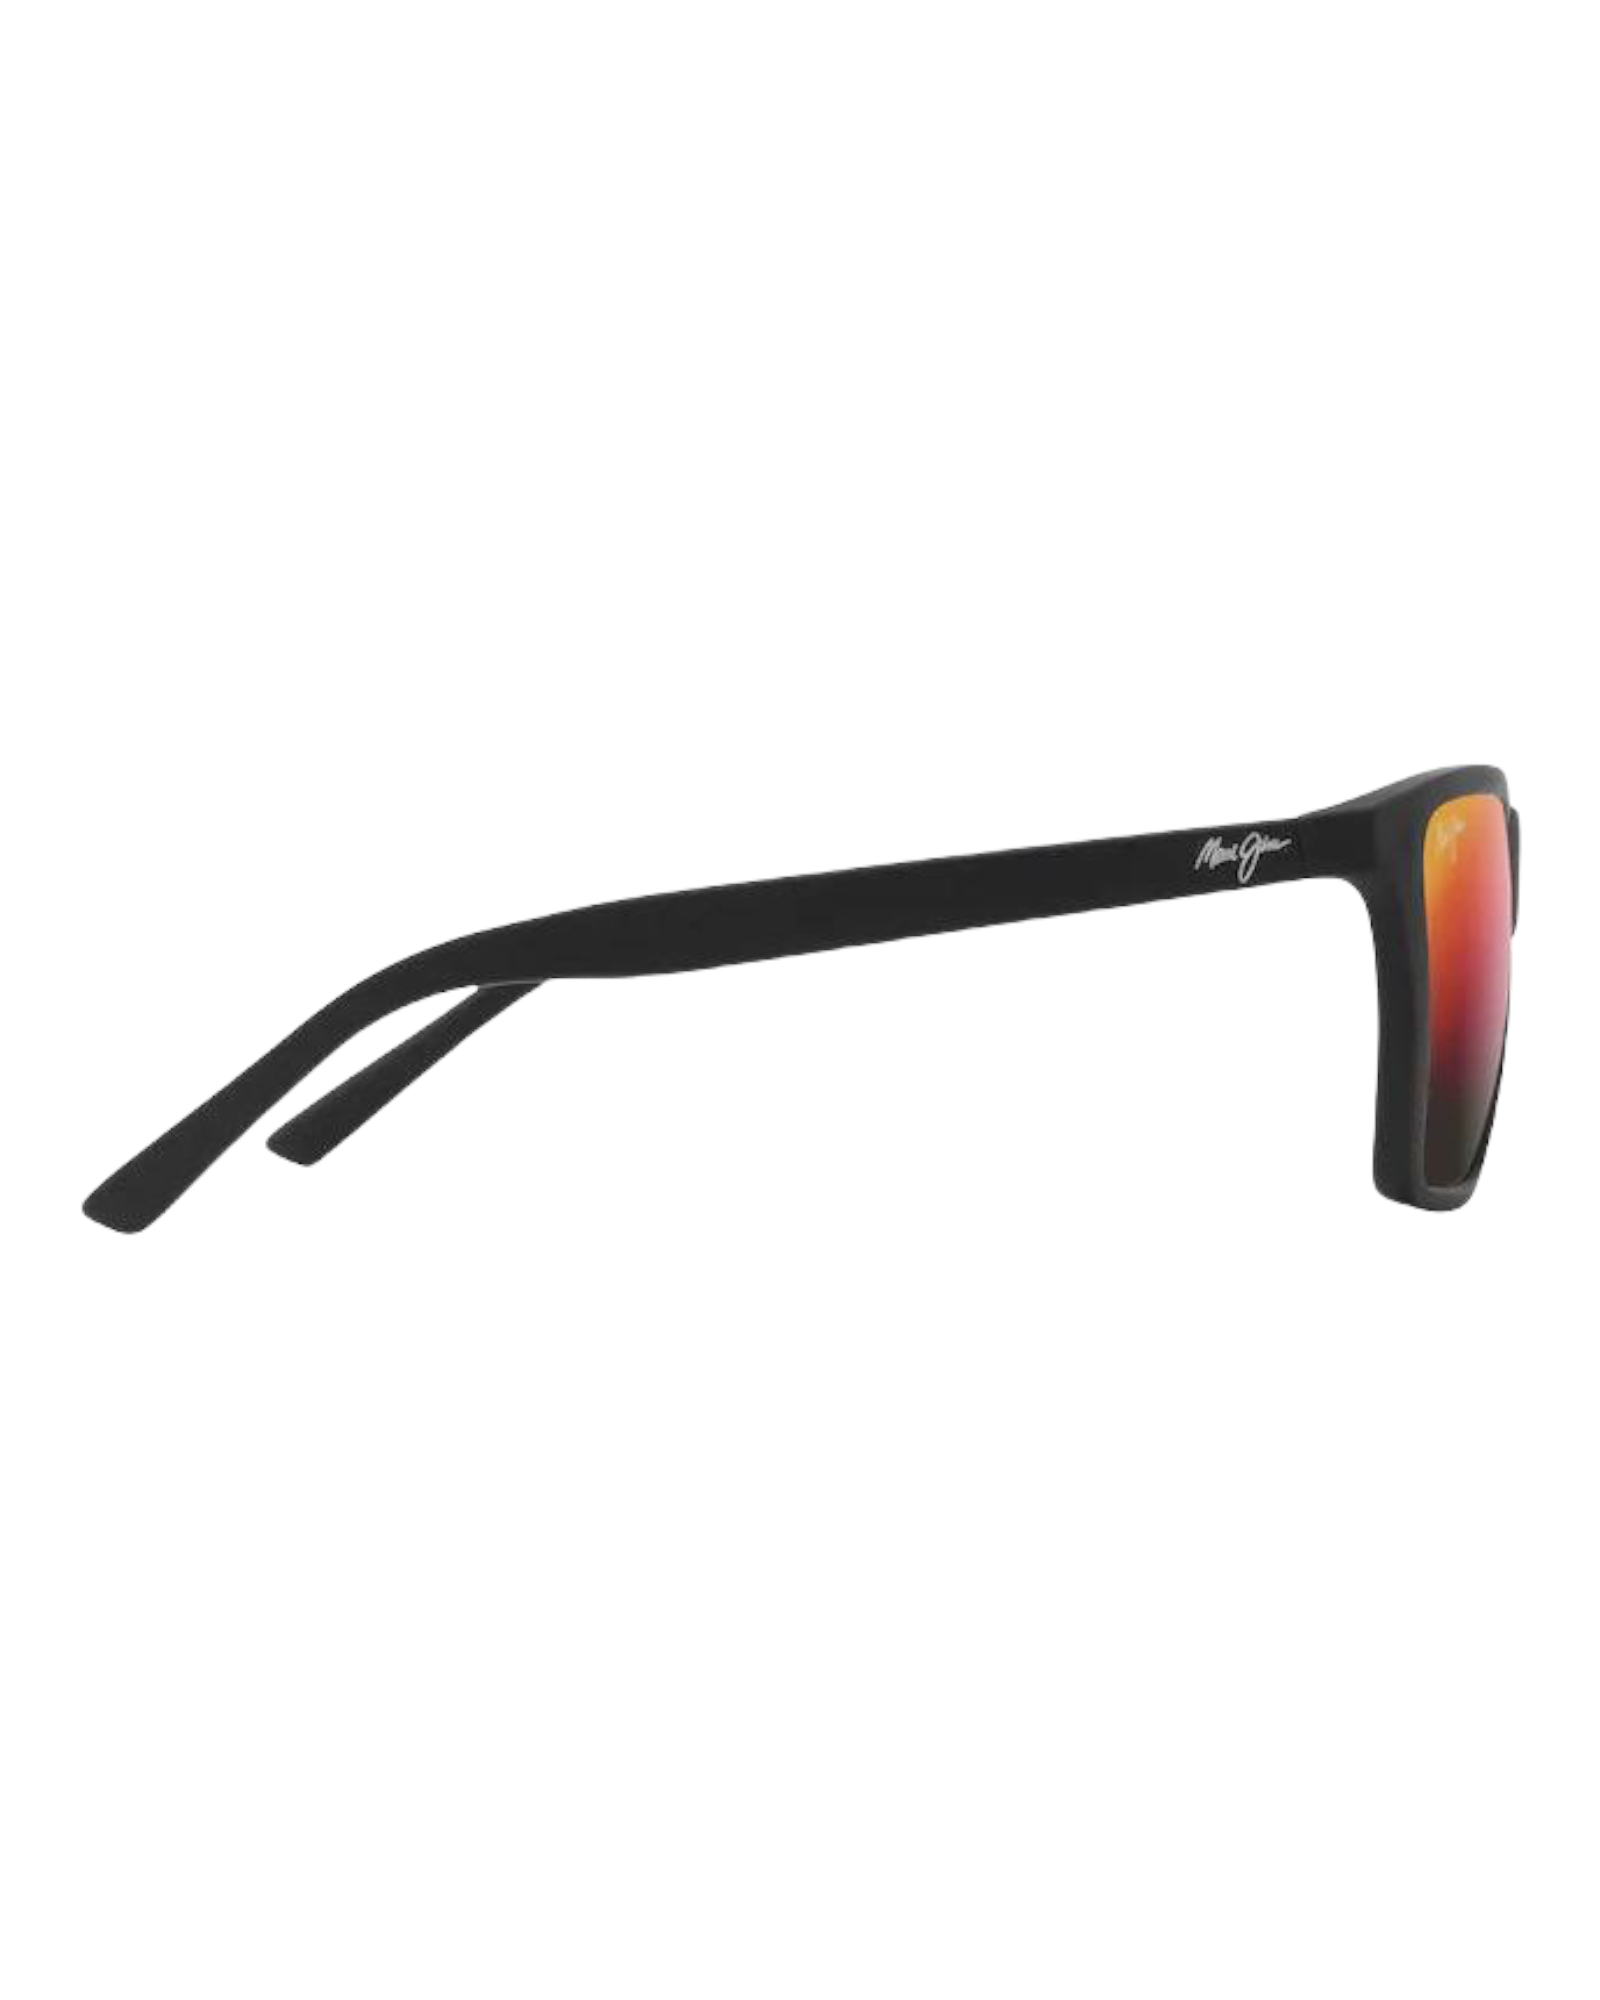 Maui Jim Hawaii Lava Cruzem Polarized Sunglasses.